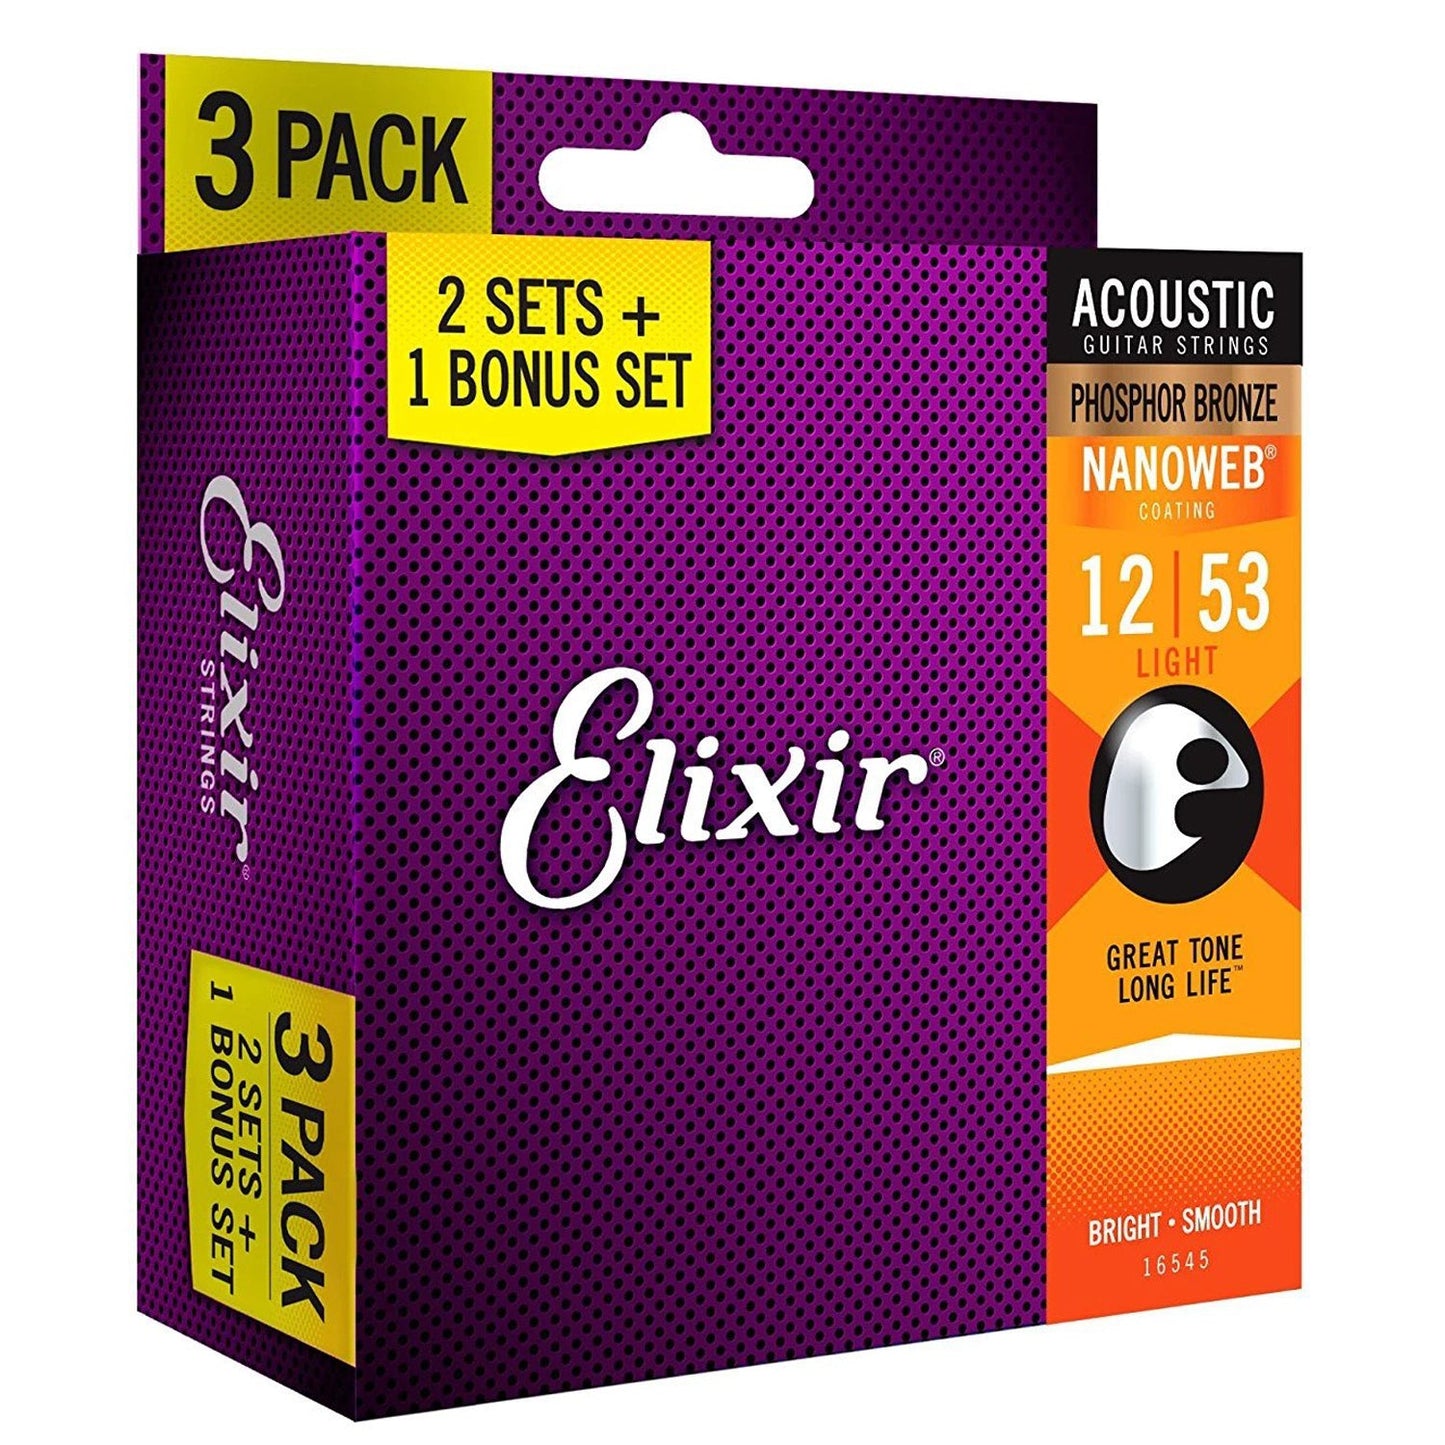 Elixir Acoustic Phosphor Bronze Acoustic Guitar Strings with Nanoweb Coating - Light (12 16 24 32 42 53) 3-Pack